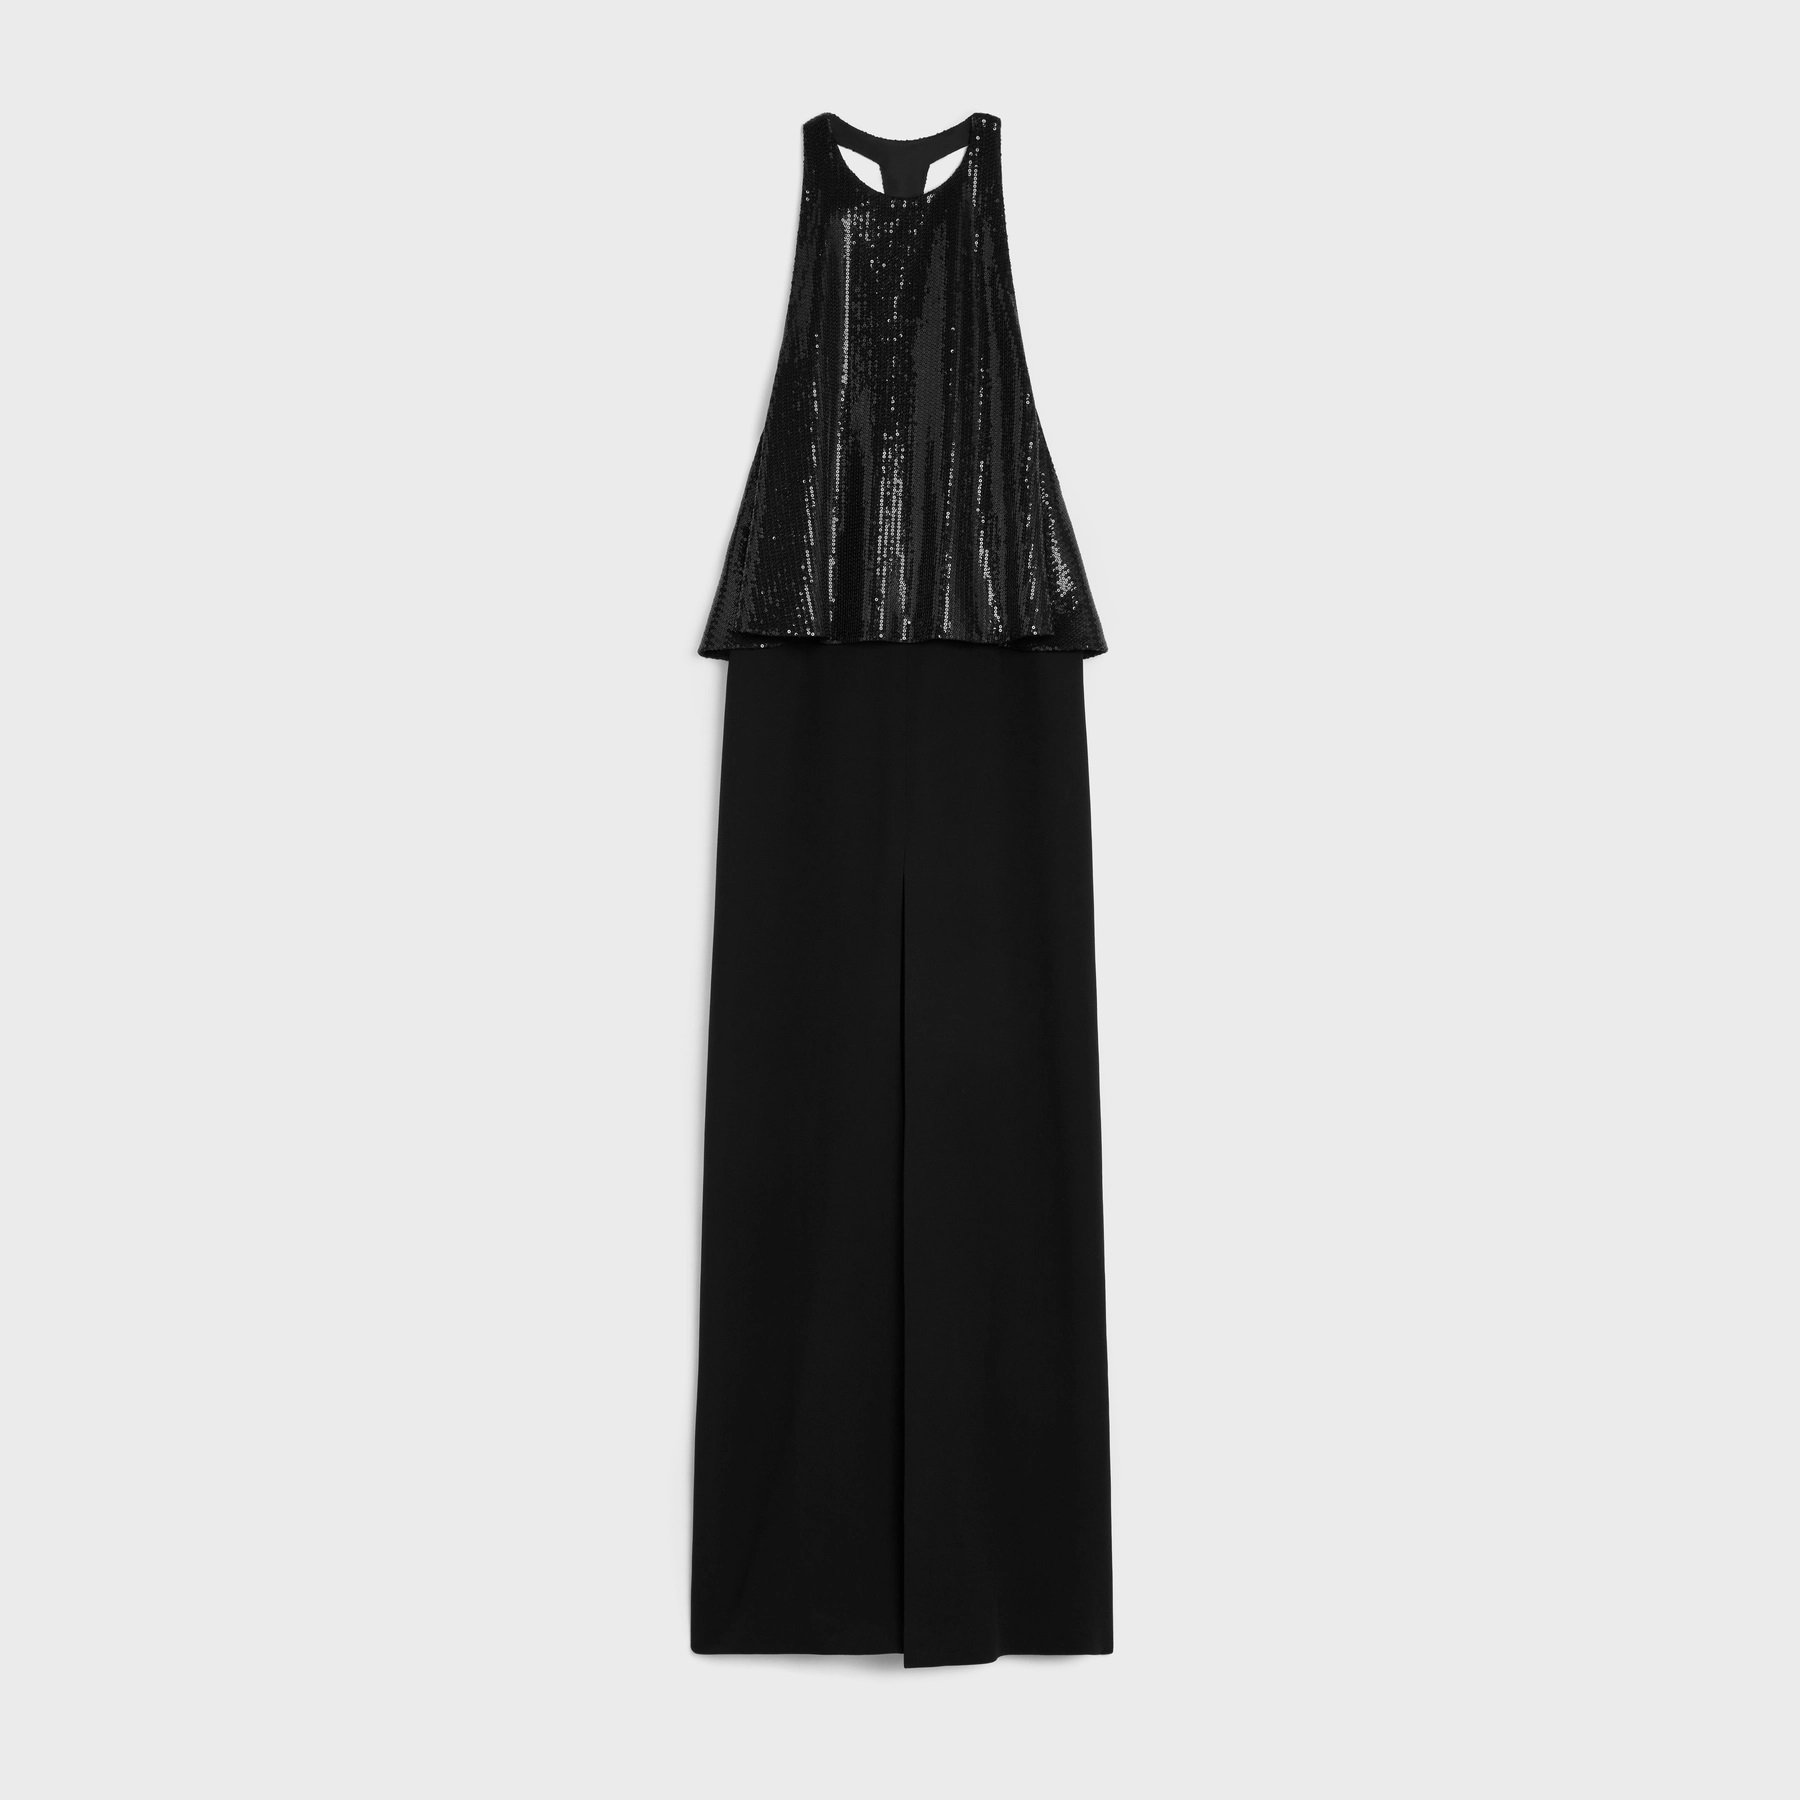 Céline Embroidered Column Dress in Black Satin-Lined Crepe.jpg